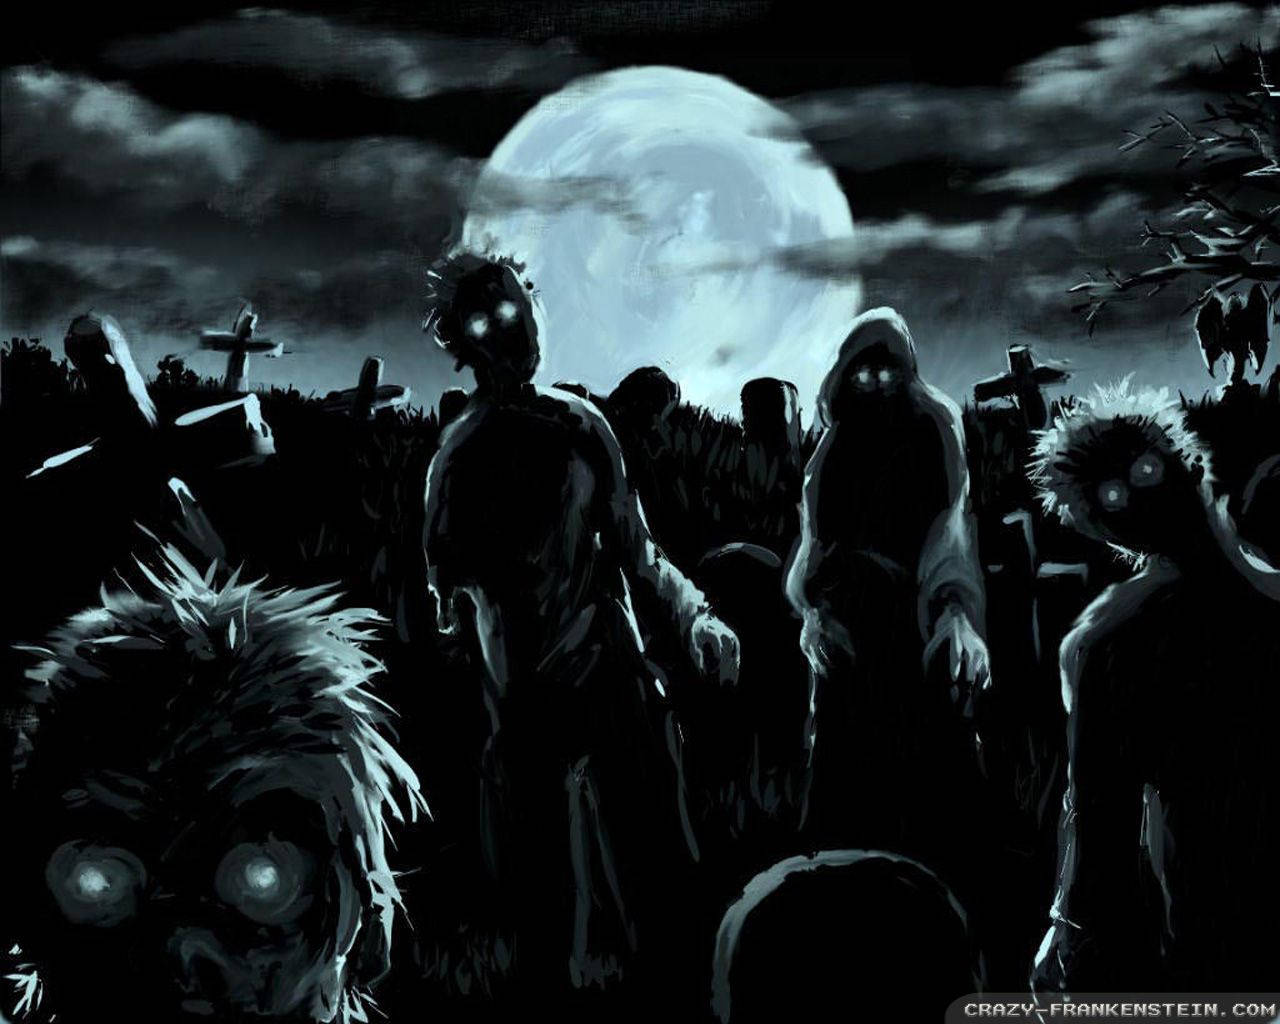  Zombie Hintergrundbild 1280x1024. Free Dying Light 2 Wallpaper Downloads, Dying Light 2 Wallpaper for FREE